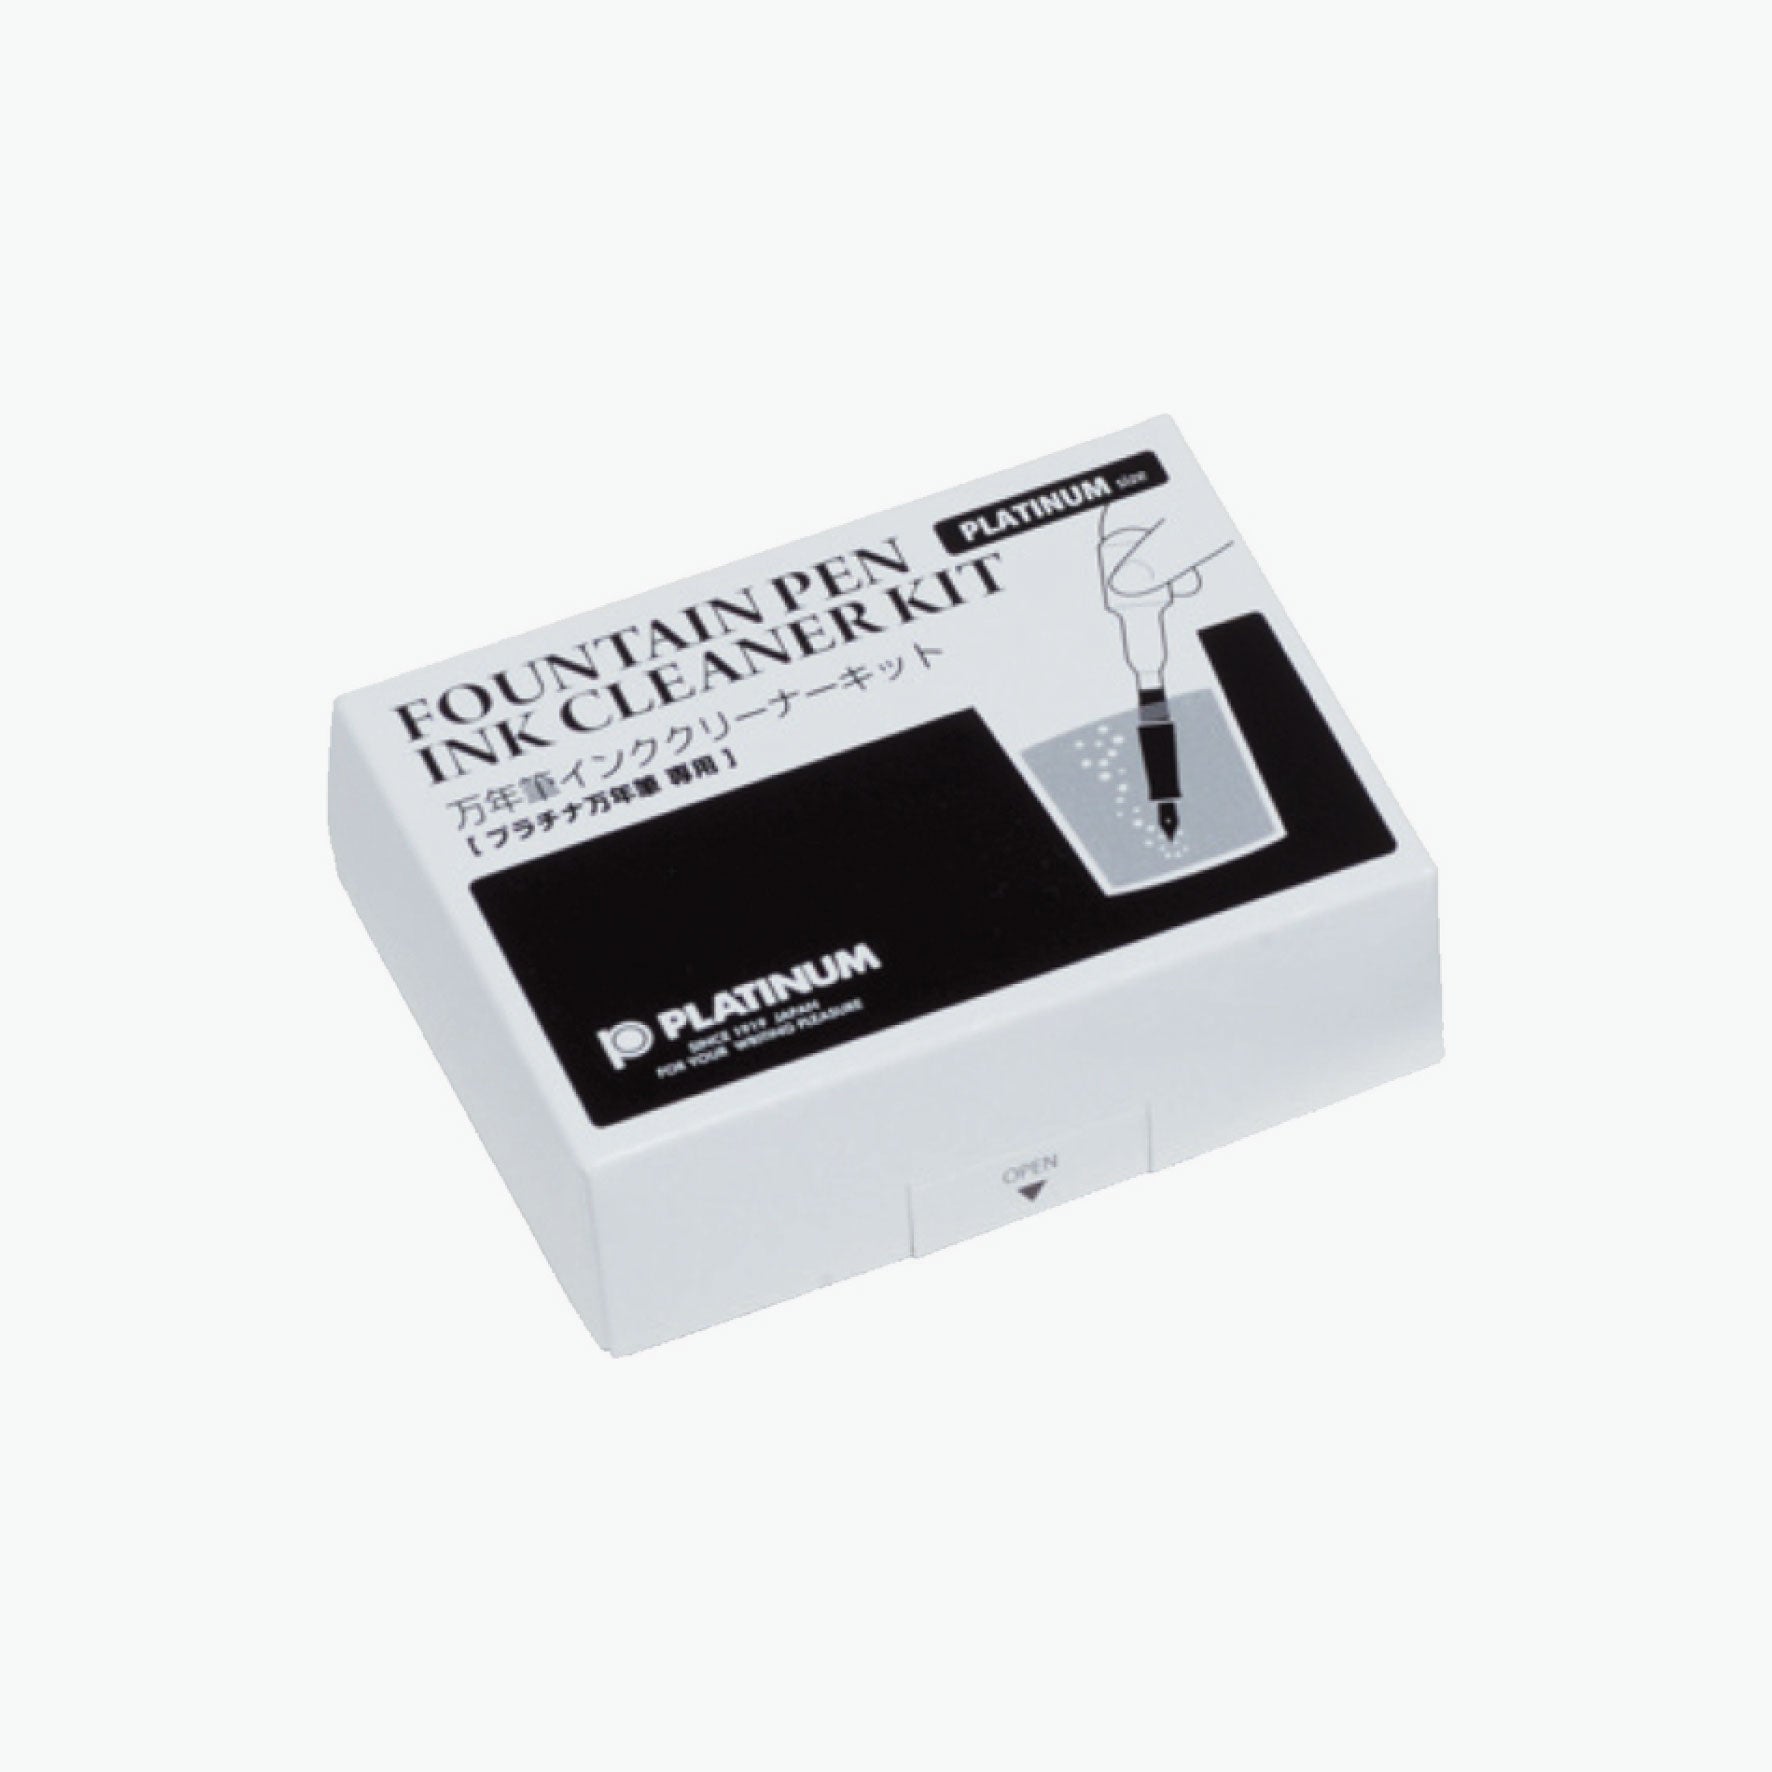 Platinum - Fountain Pen Cleaner - Ink Cleaner Kit - Platinum Model